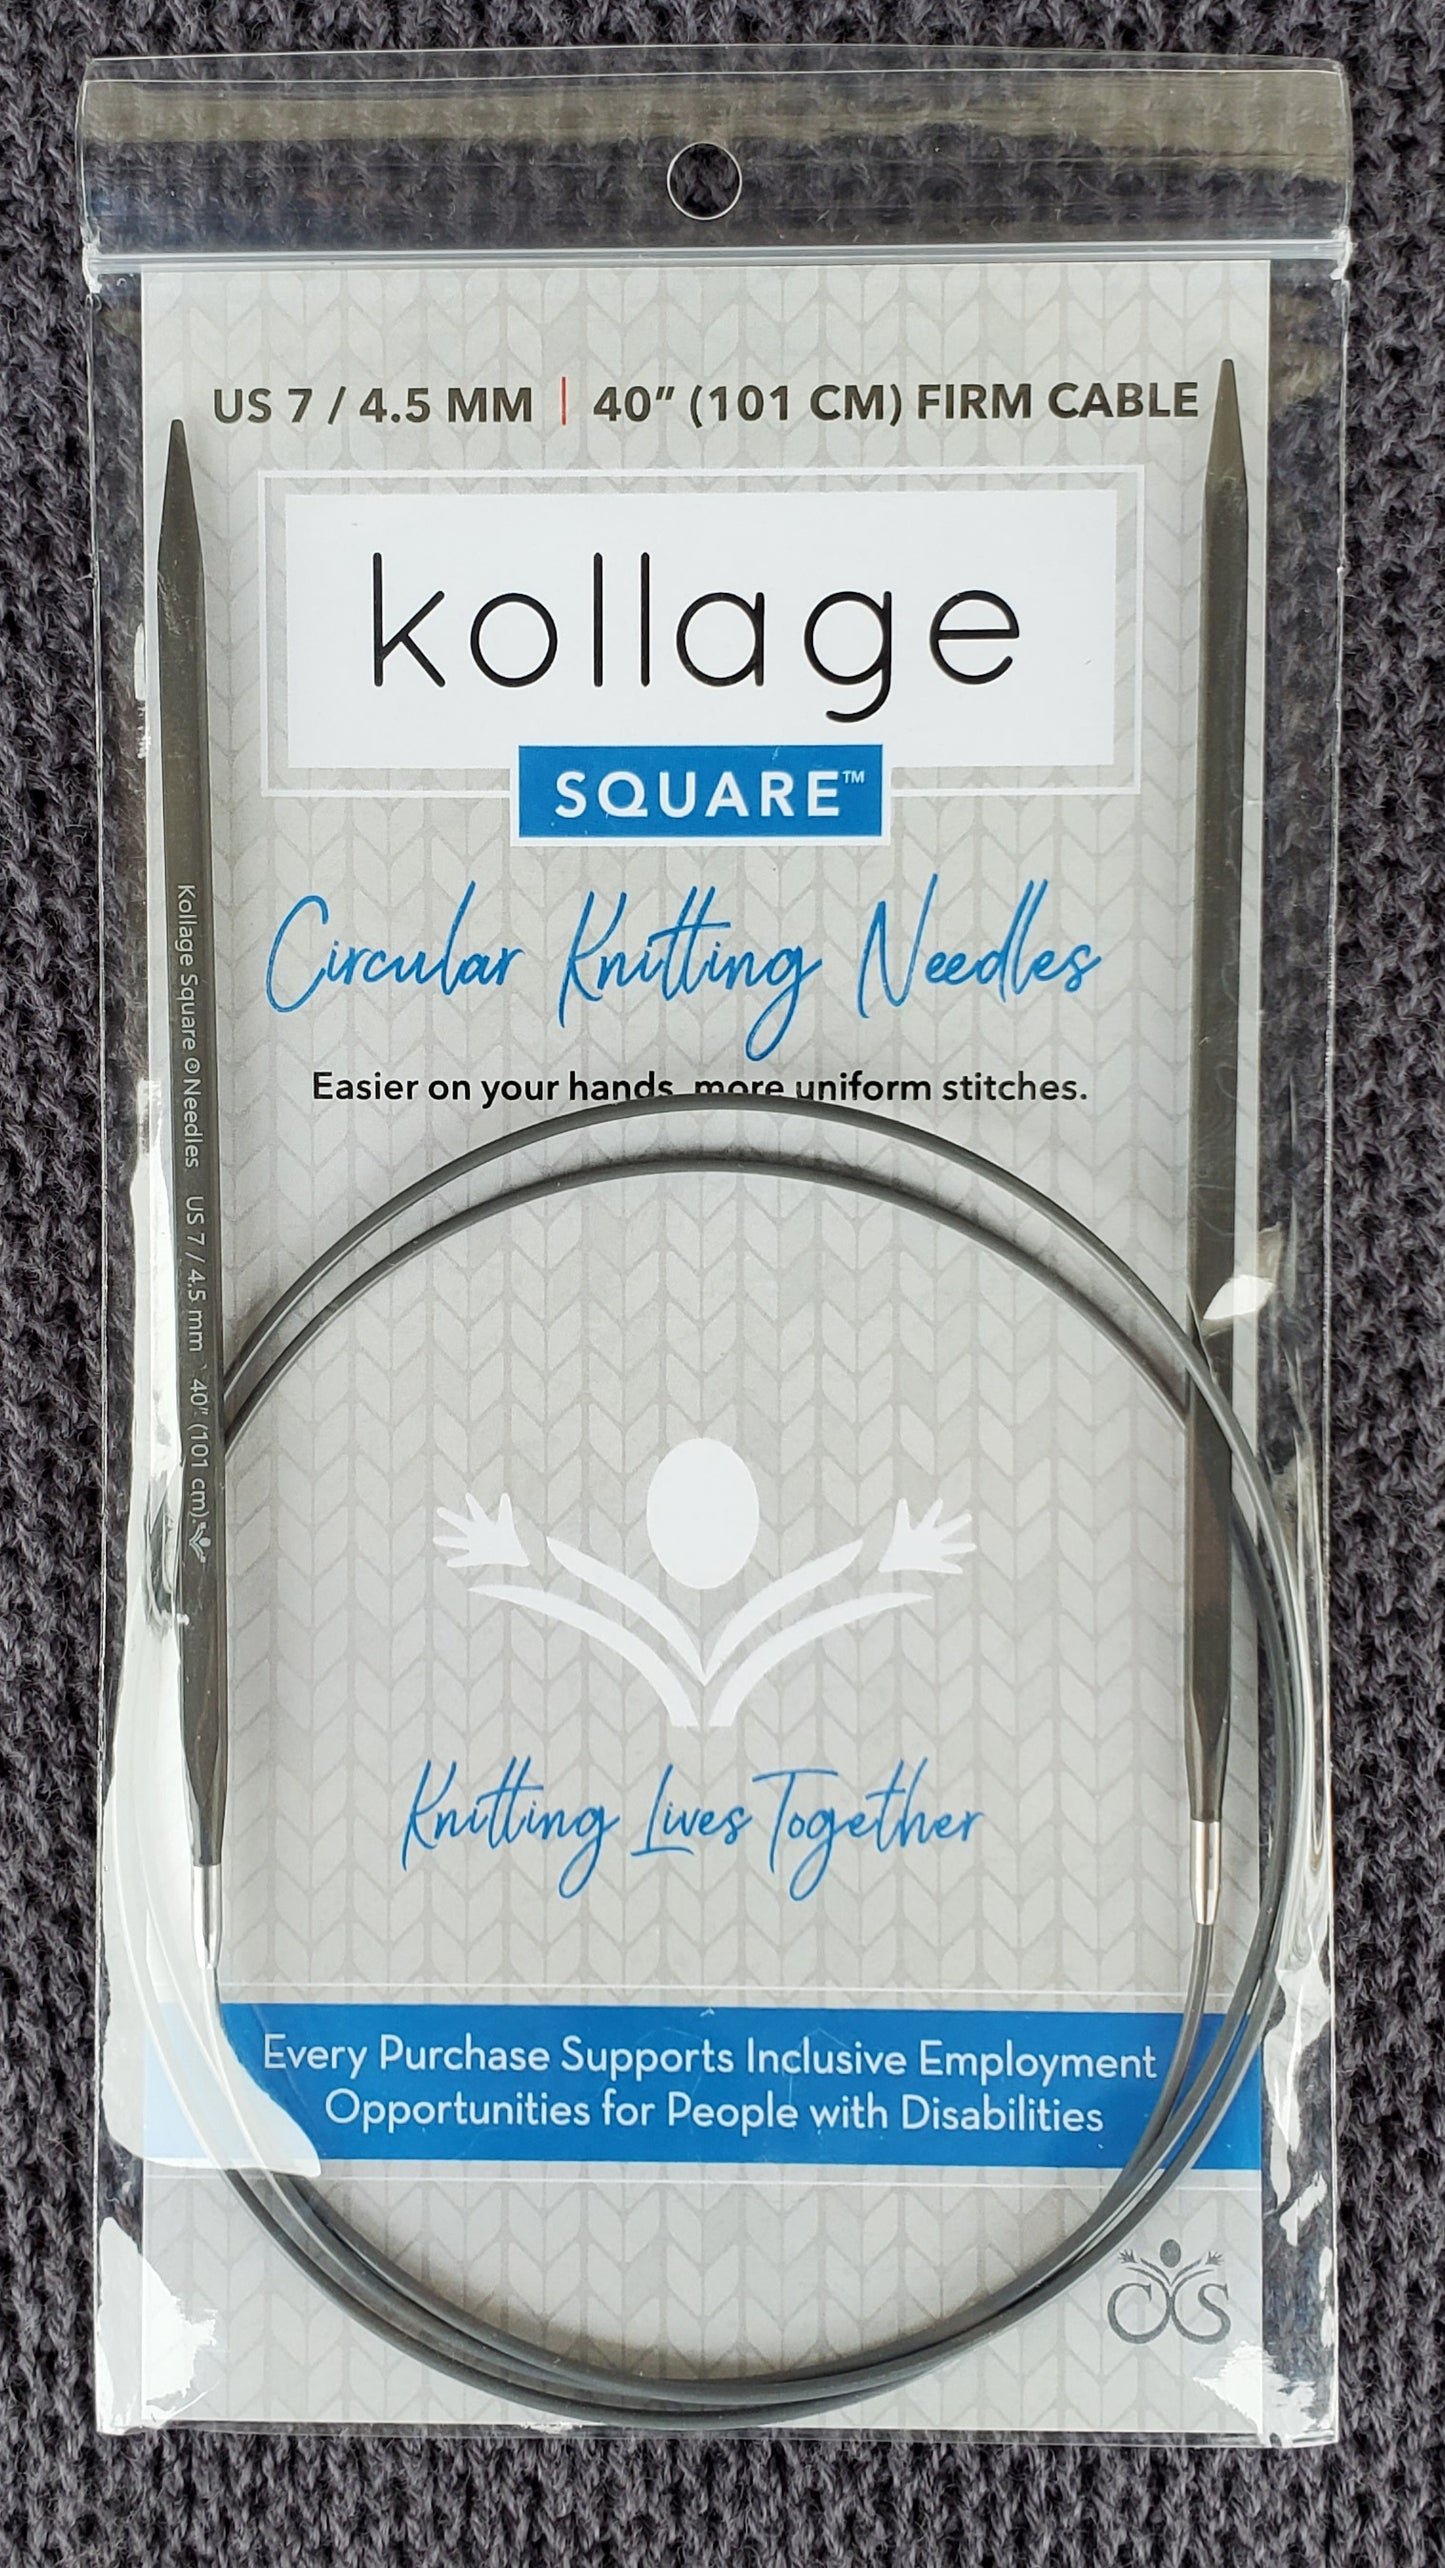 kollage SQUARE - Needle and Yarn bundle - Red